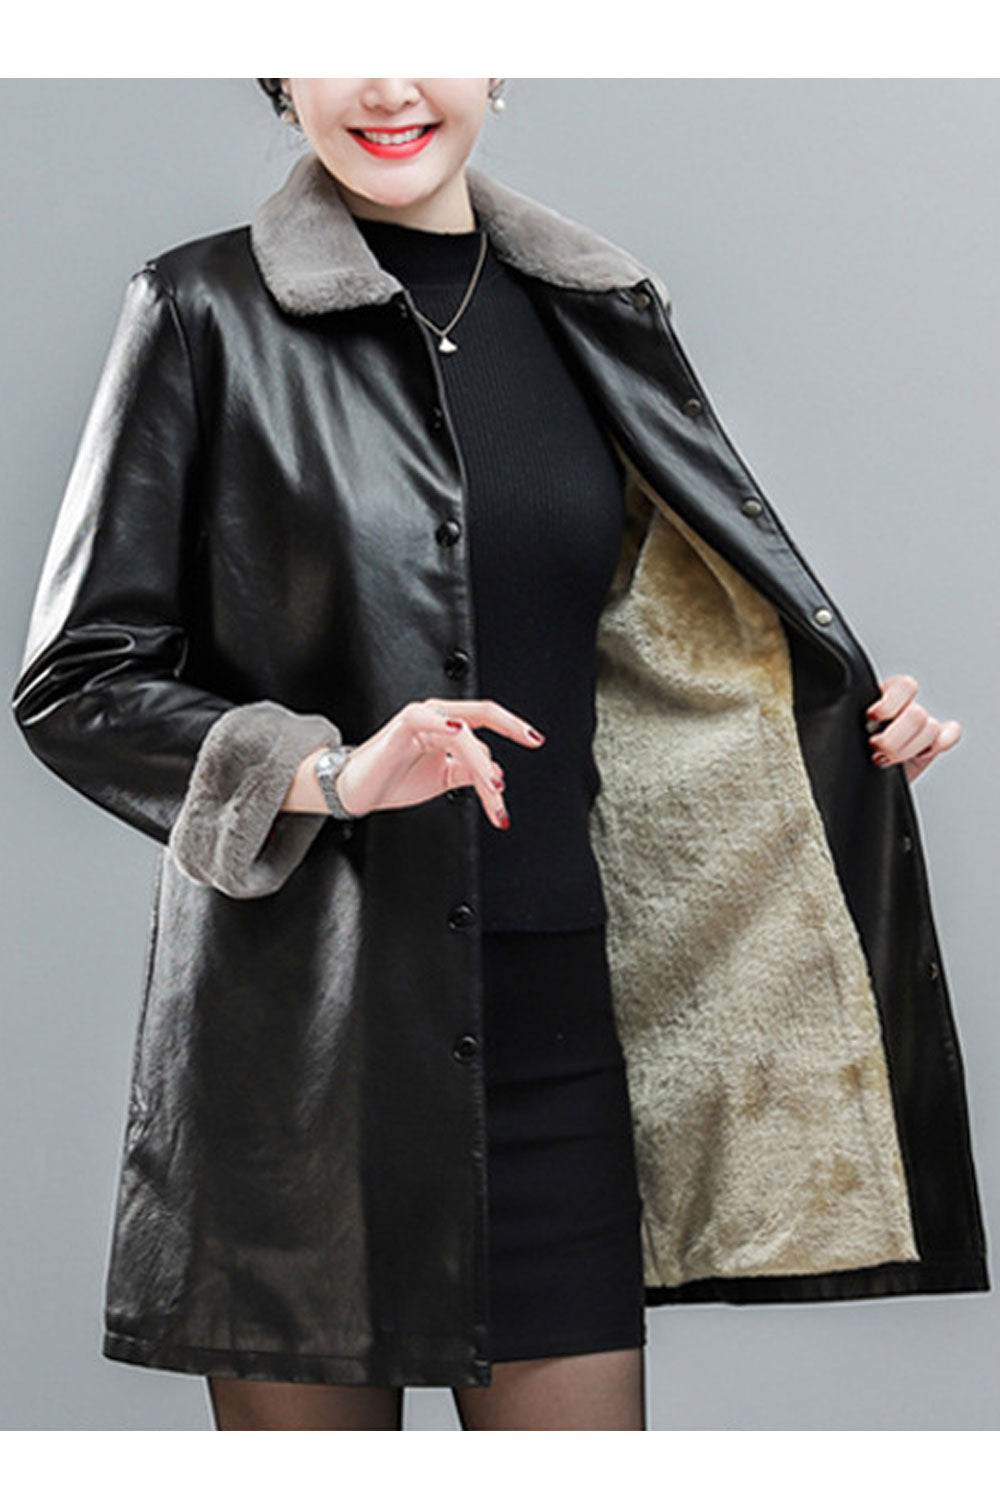 Women Amazing Collar Neck & Cuff Flap Pockets Easy Button Closure Winter Fashionable Leather Jacket - WJK118047